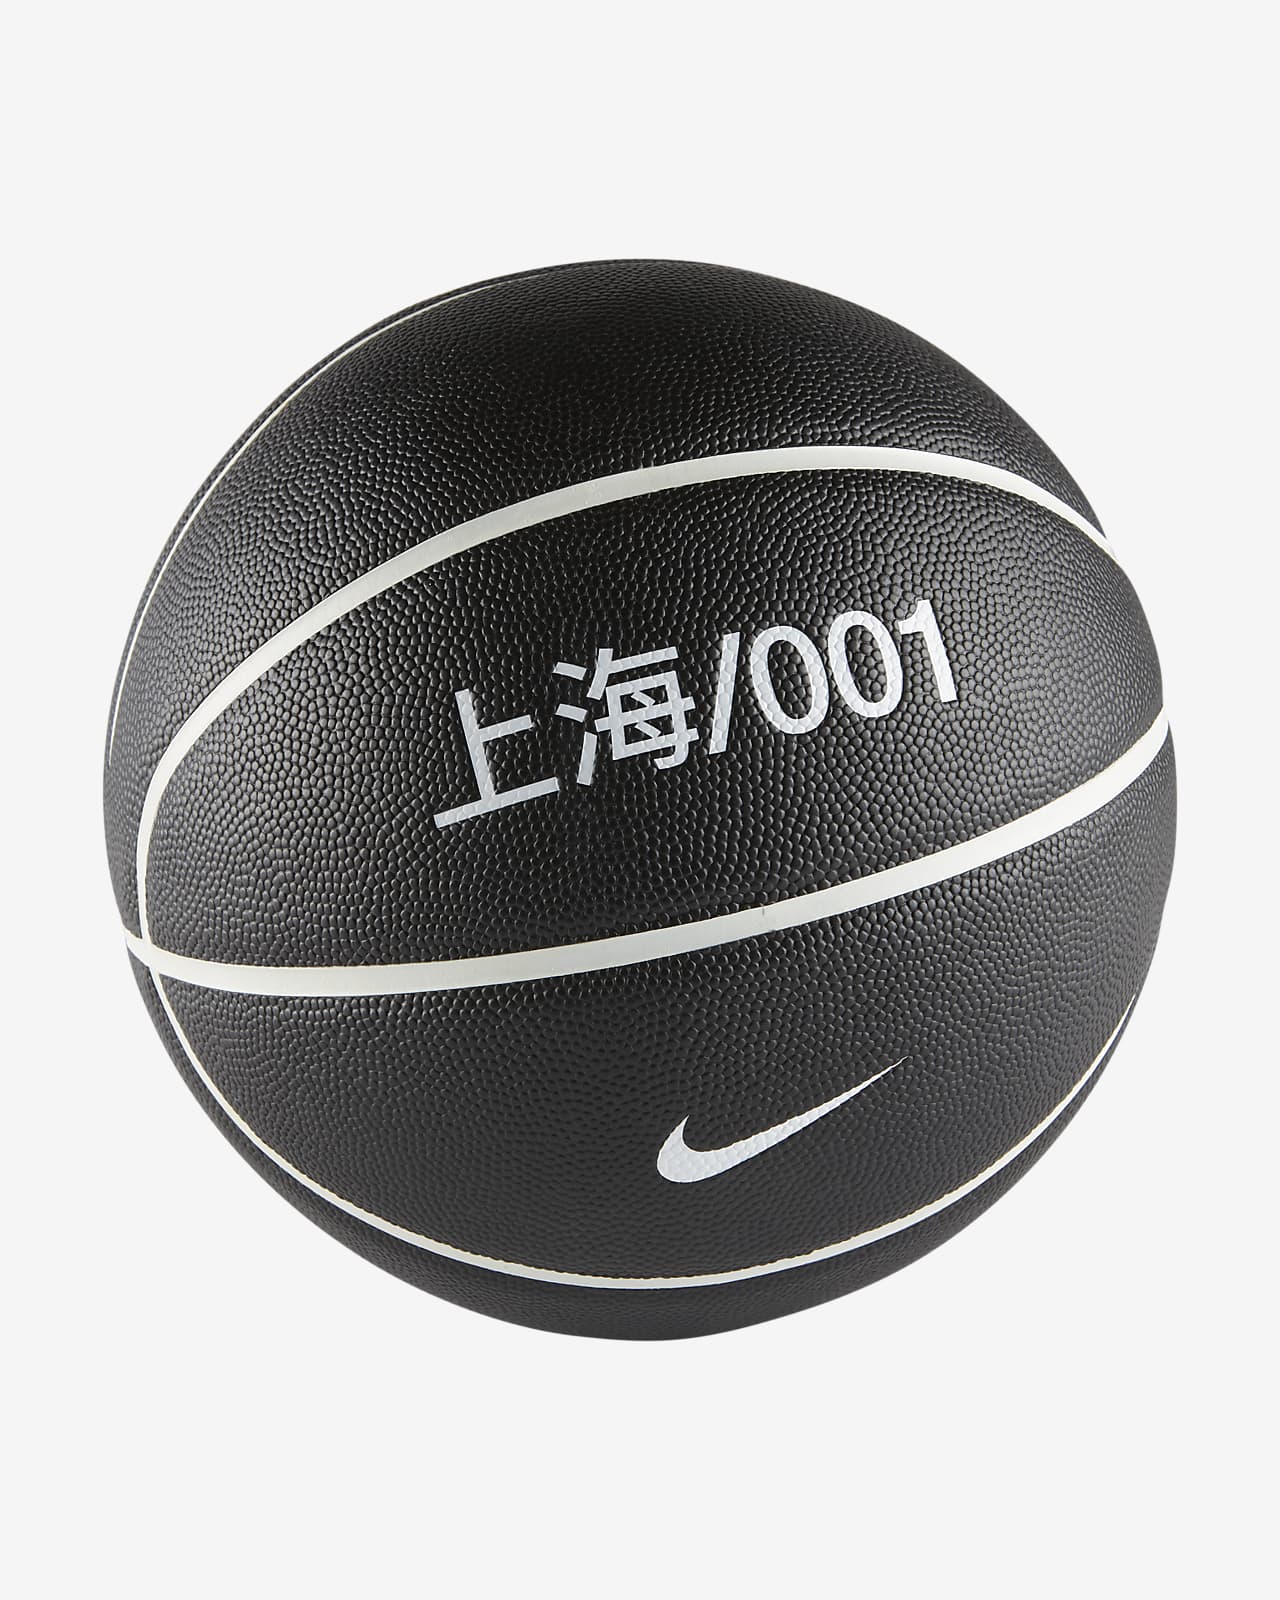 Nike House of Innovation (Shanghai) Versa Tack 8P 篮球